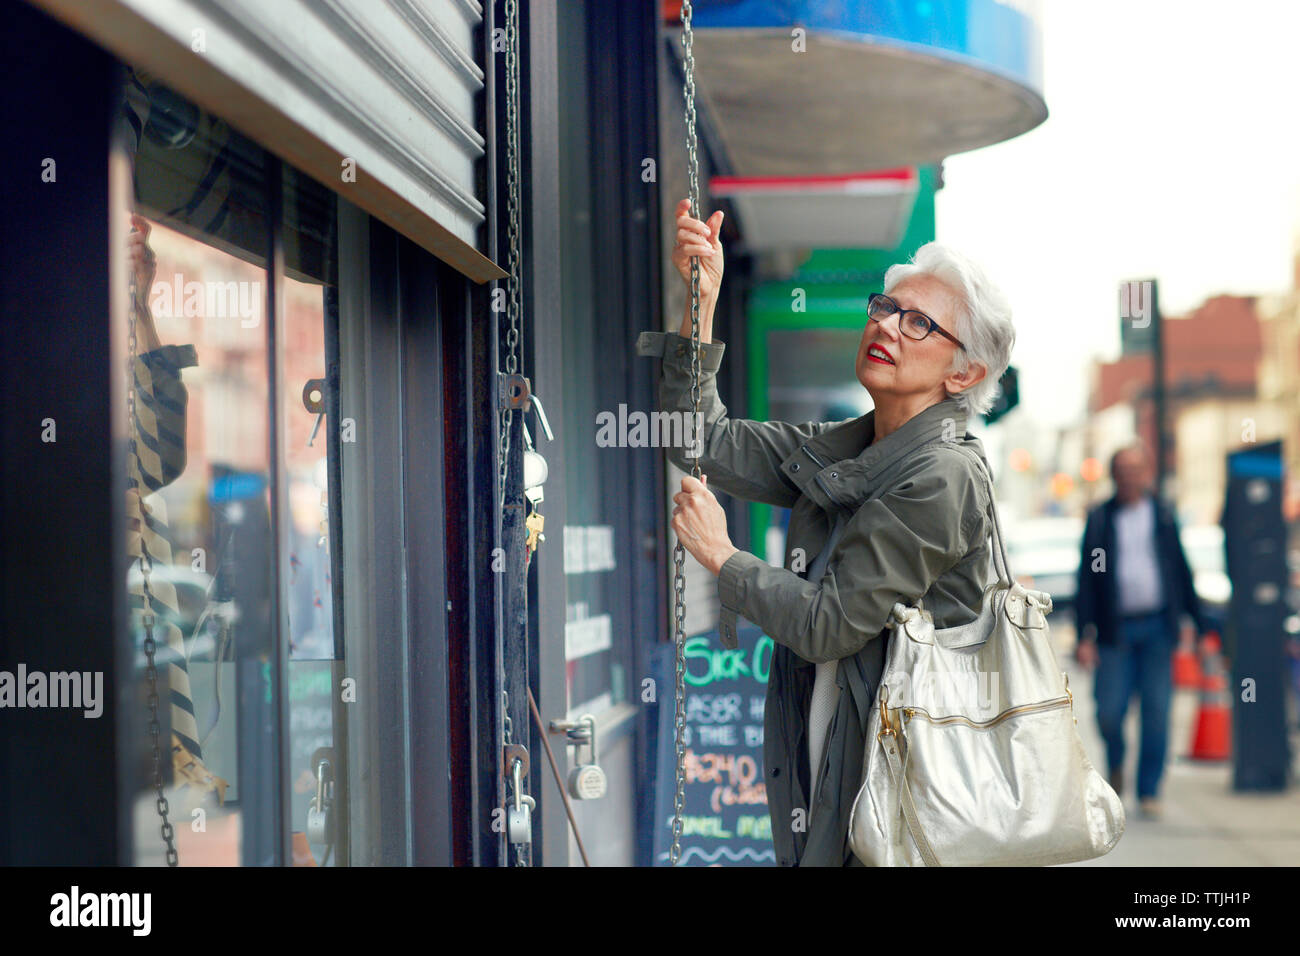 Woman opening store shutter Stock Photo